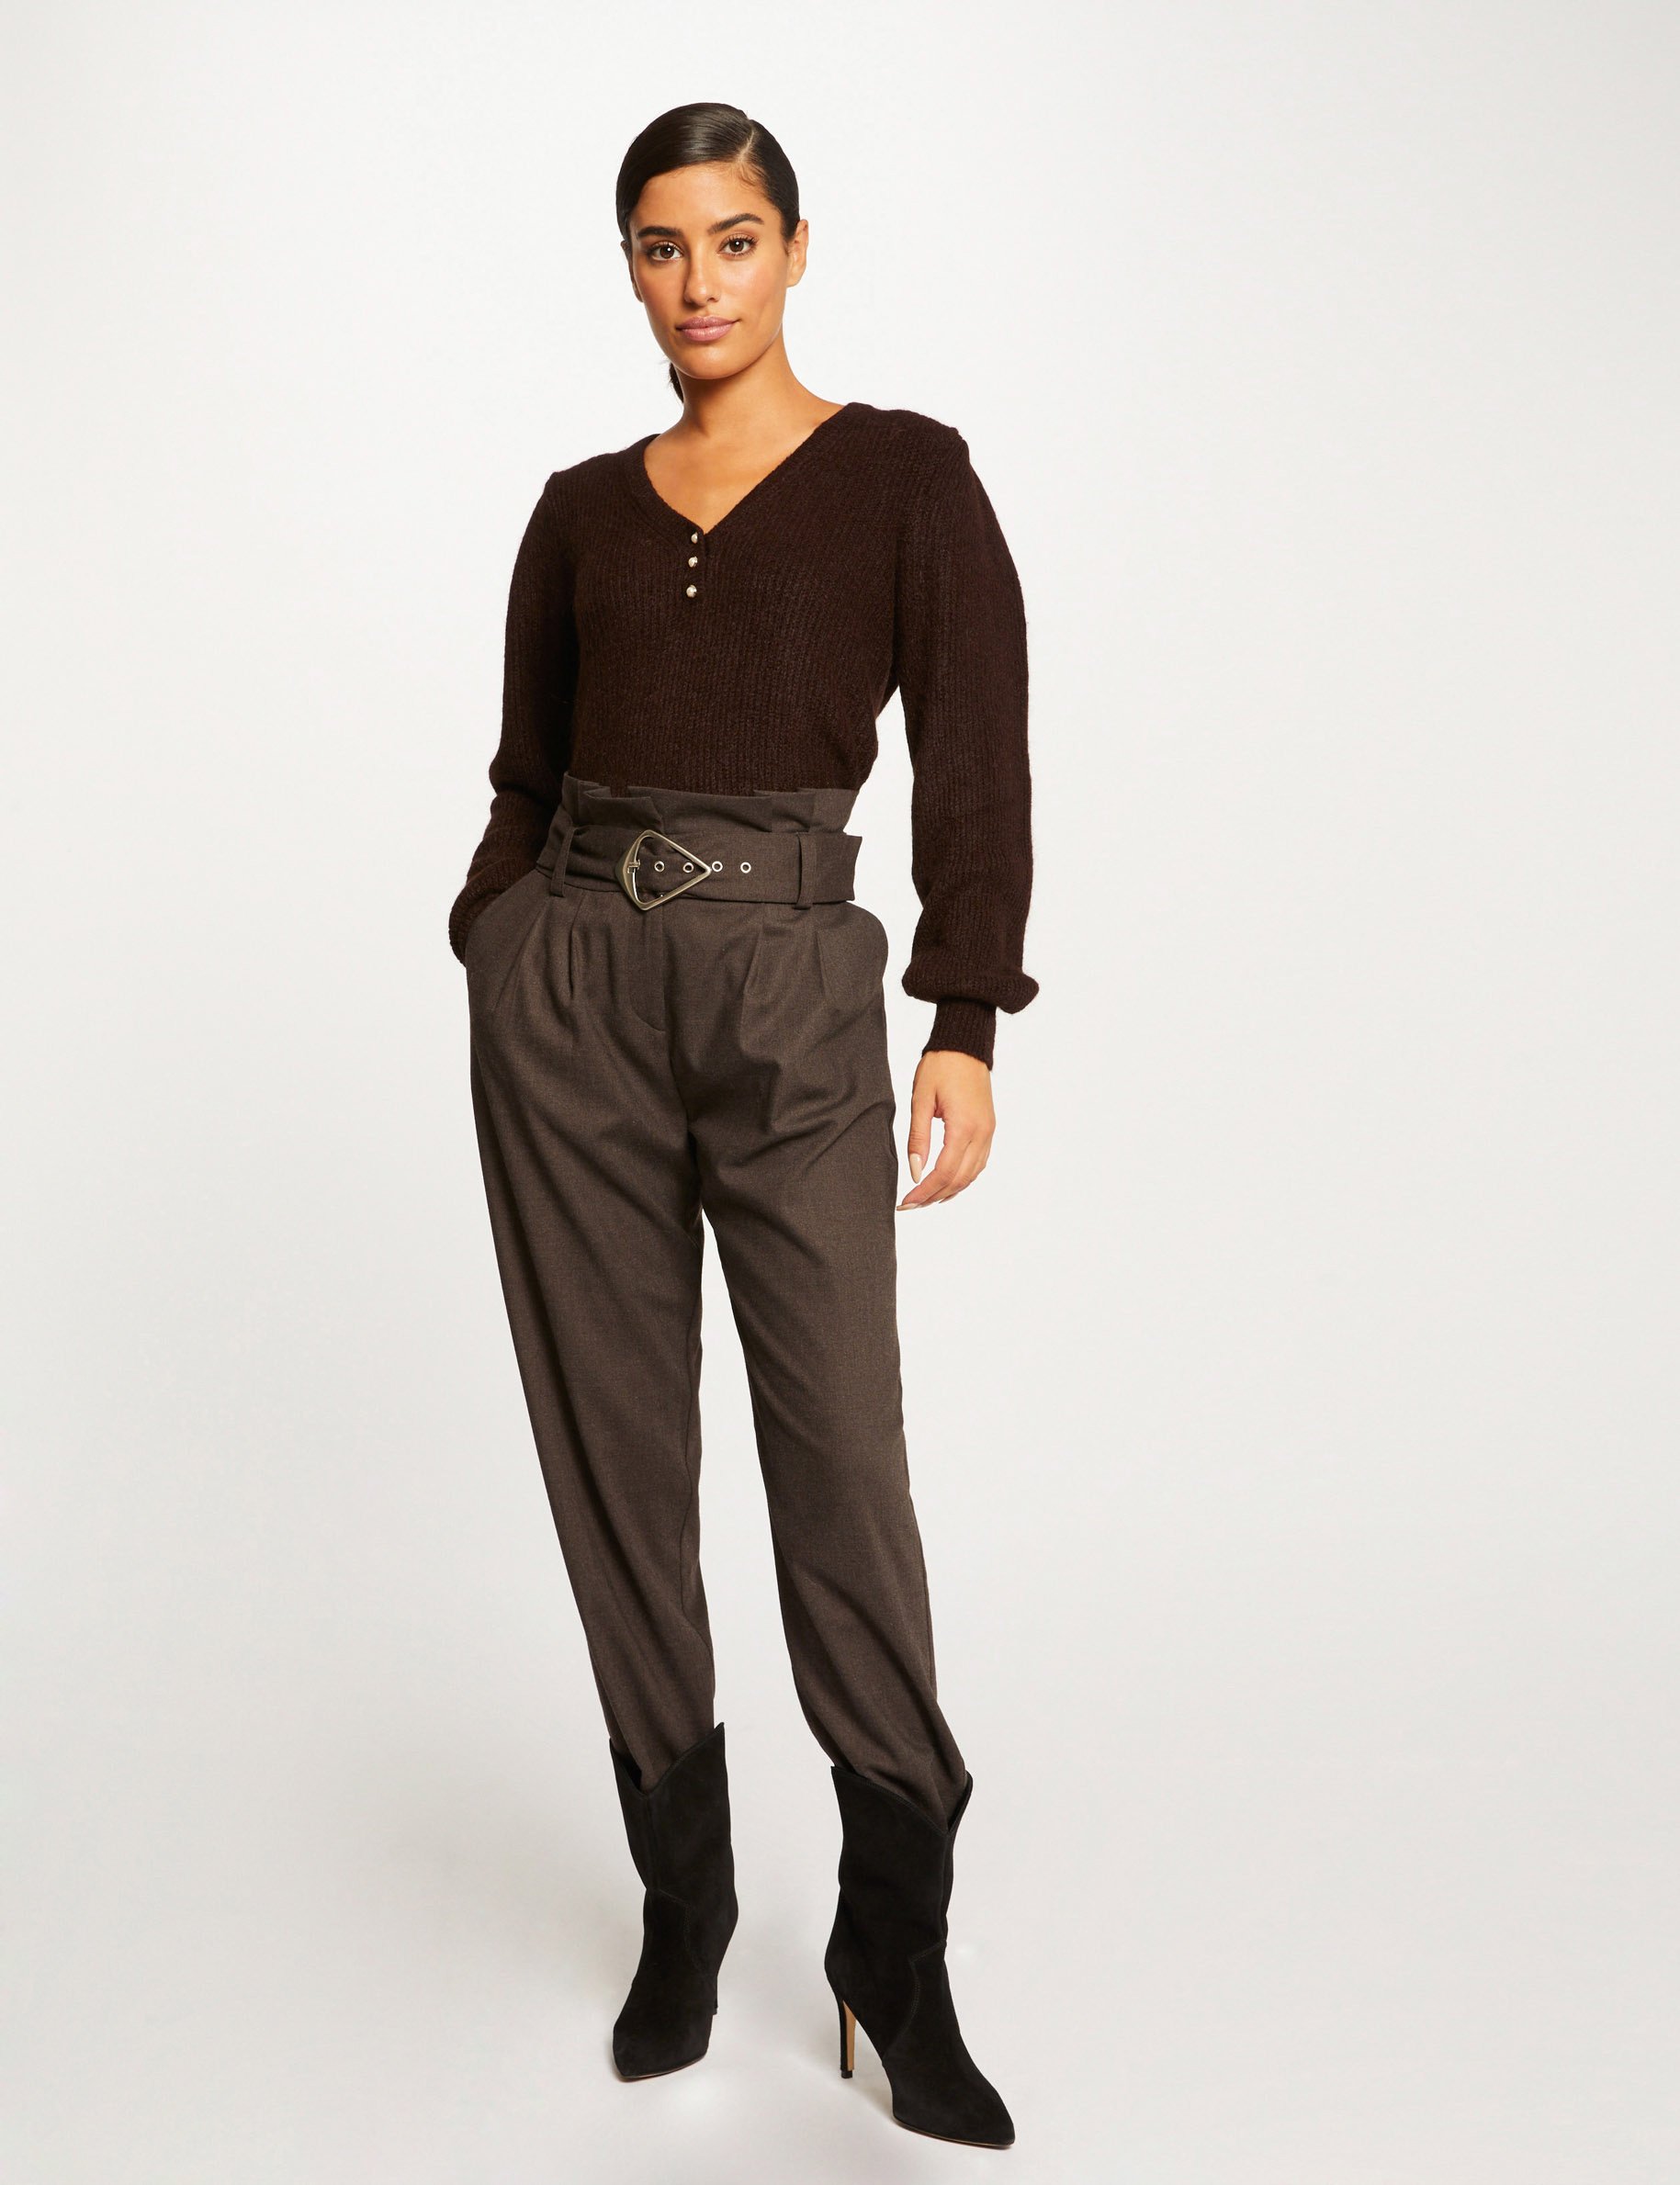 Long-sleeved jumper with V-neck dark brown ladies'